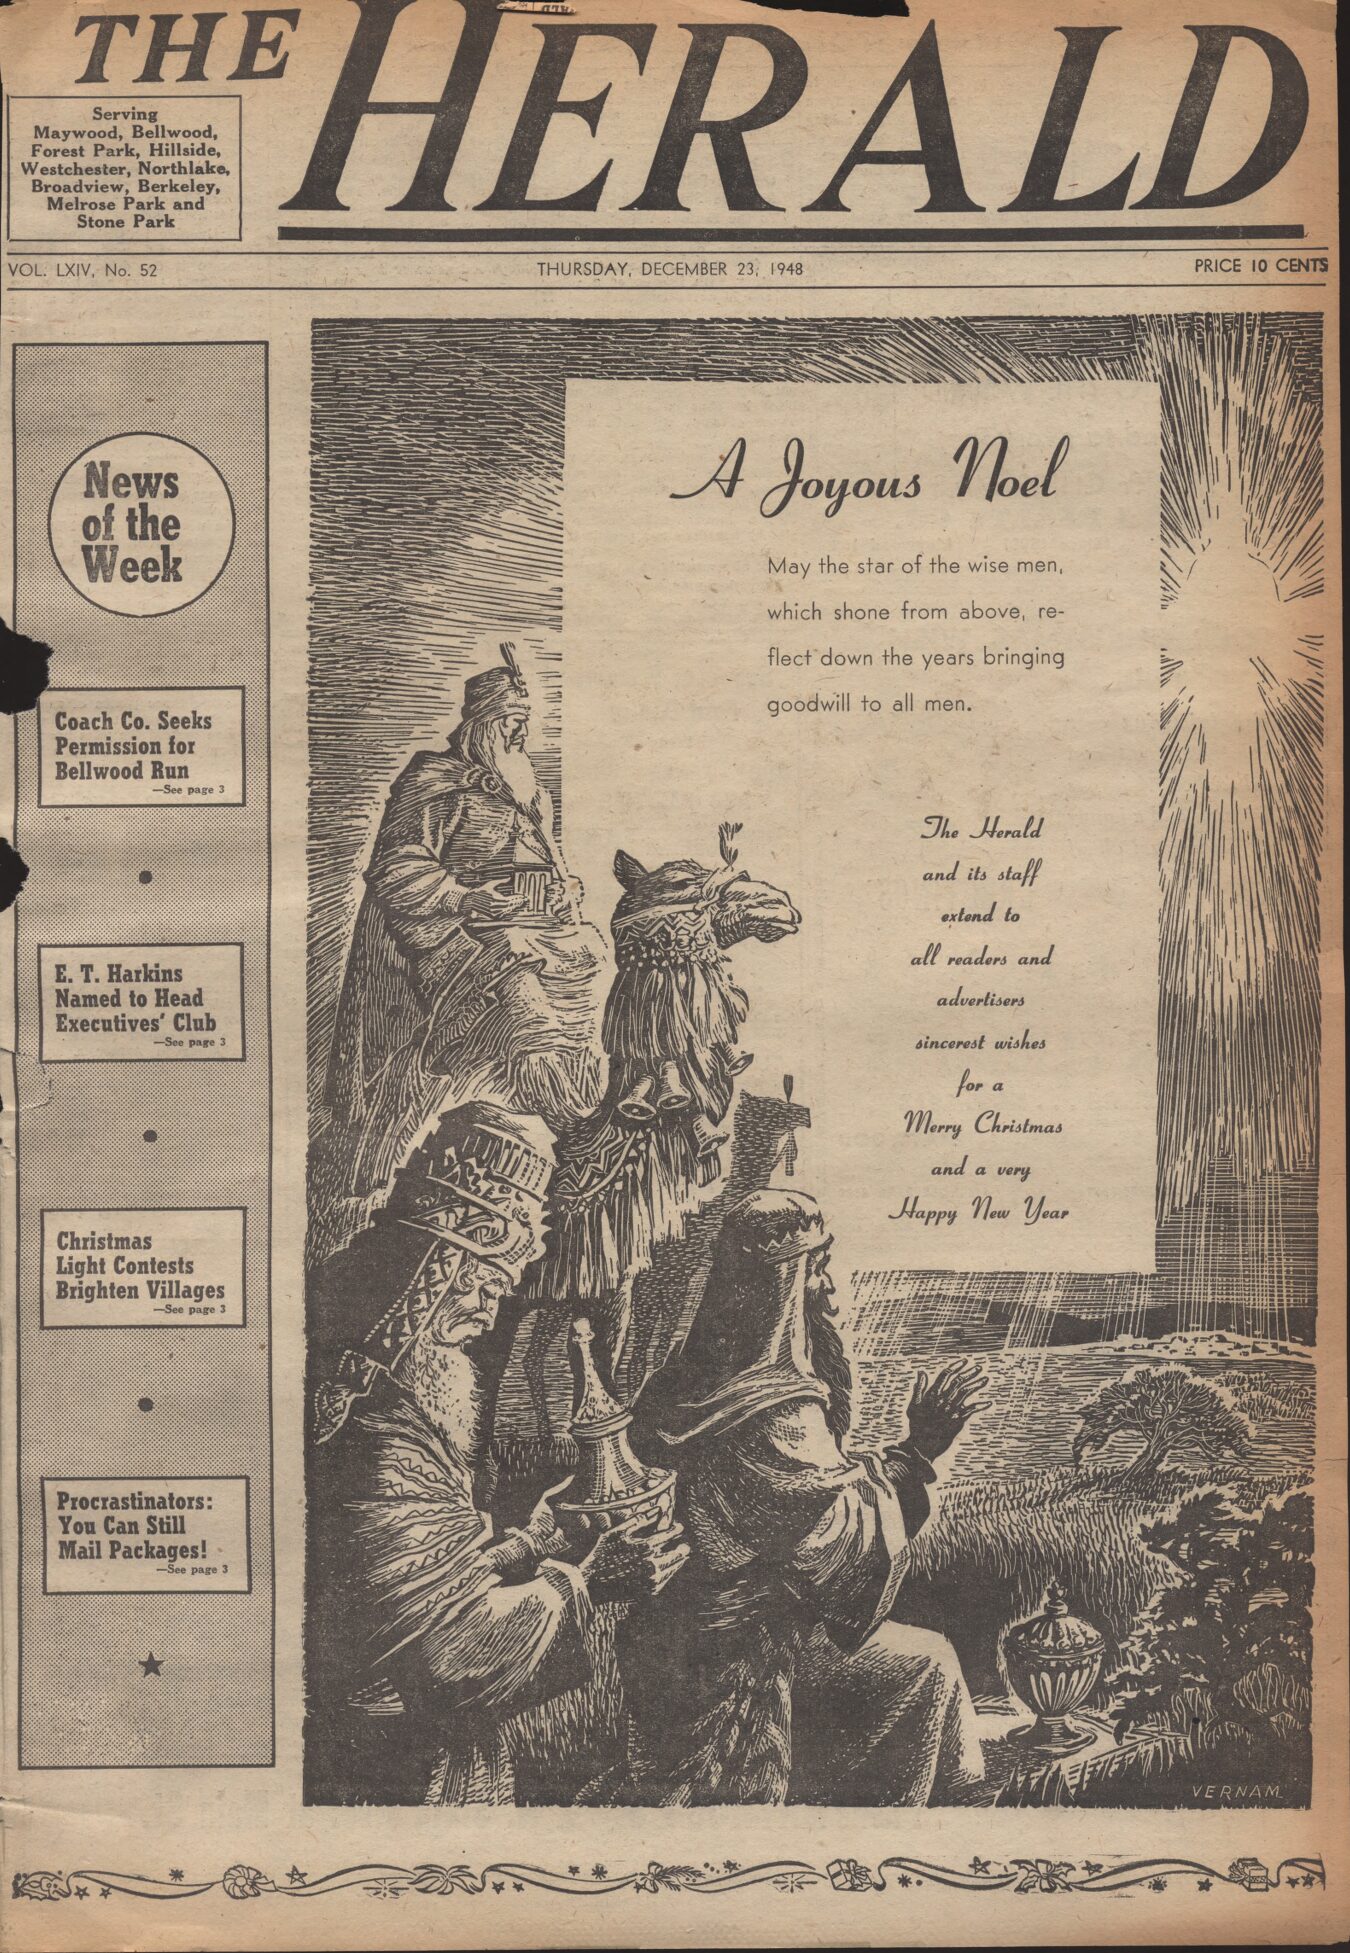 The Herald – 19481223